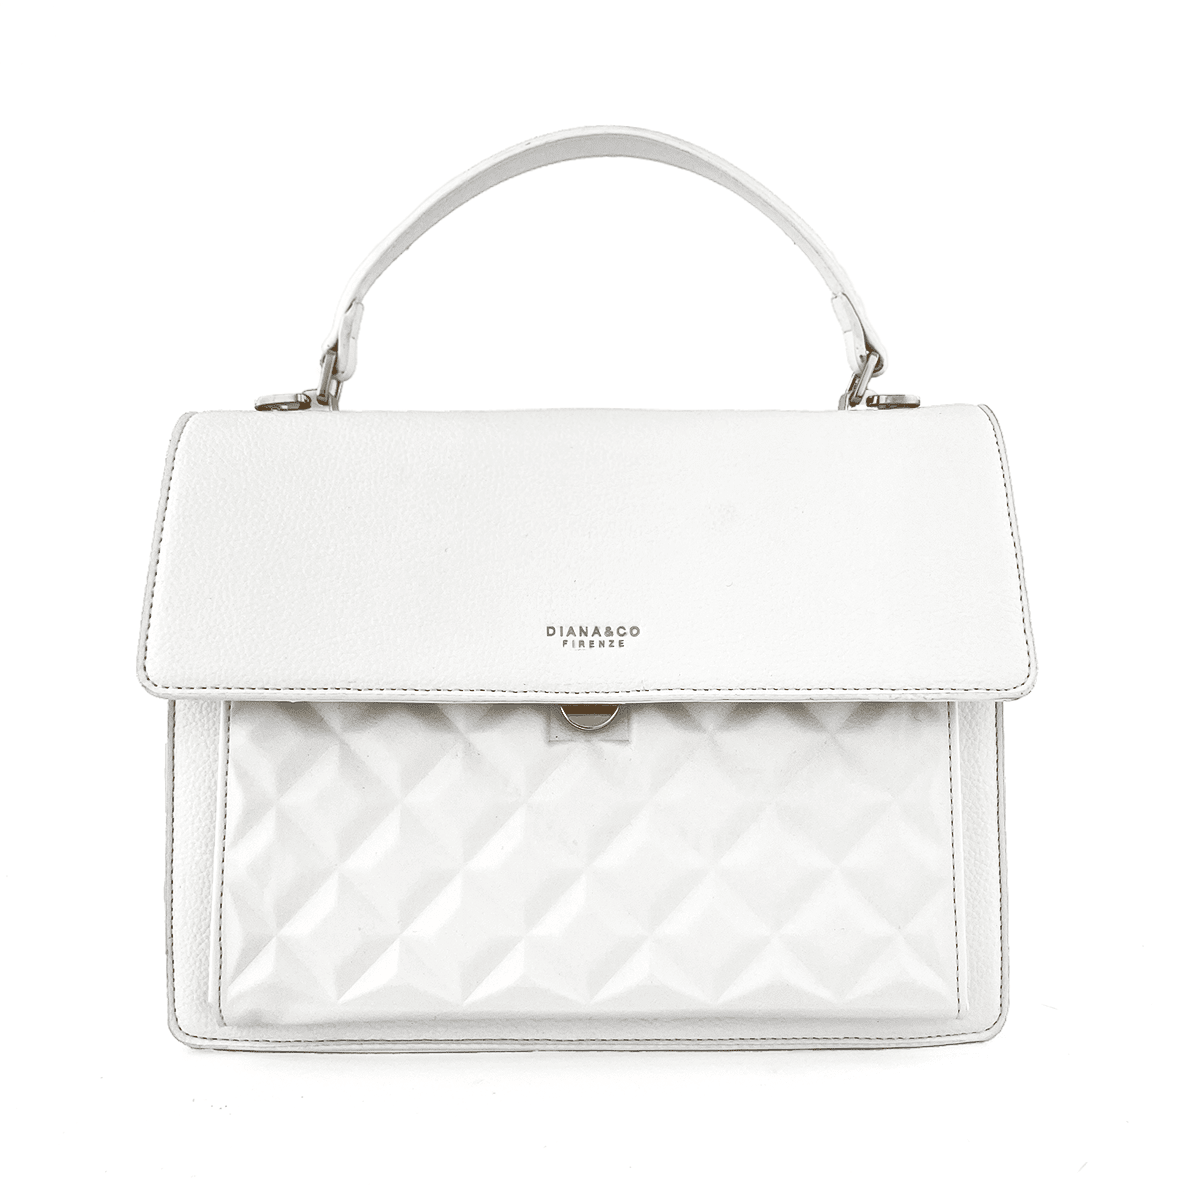 Diana & Co - Луксозна дамска чанта - бяла